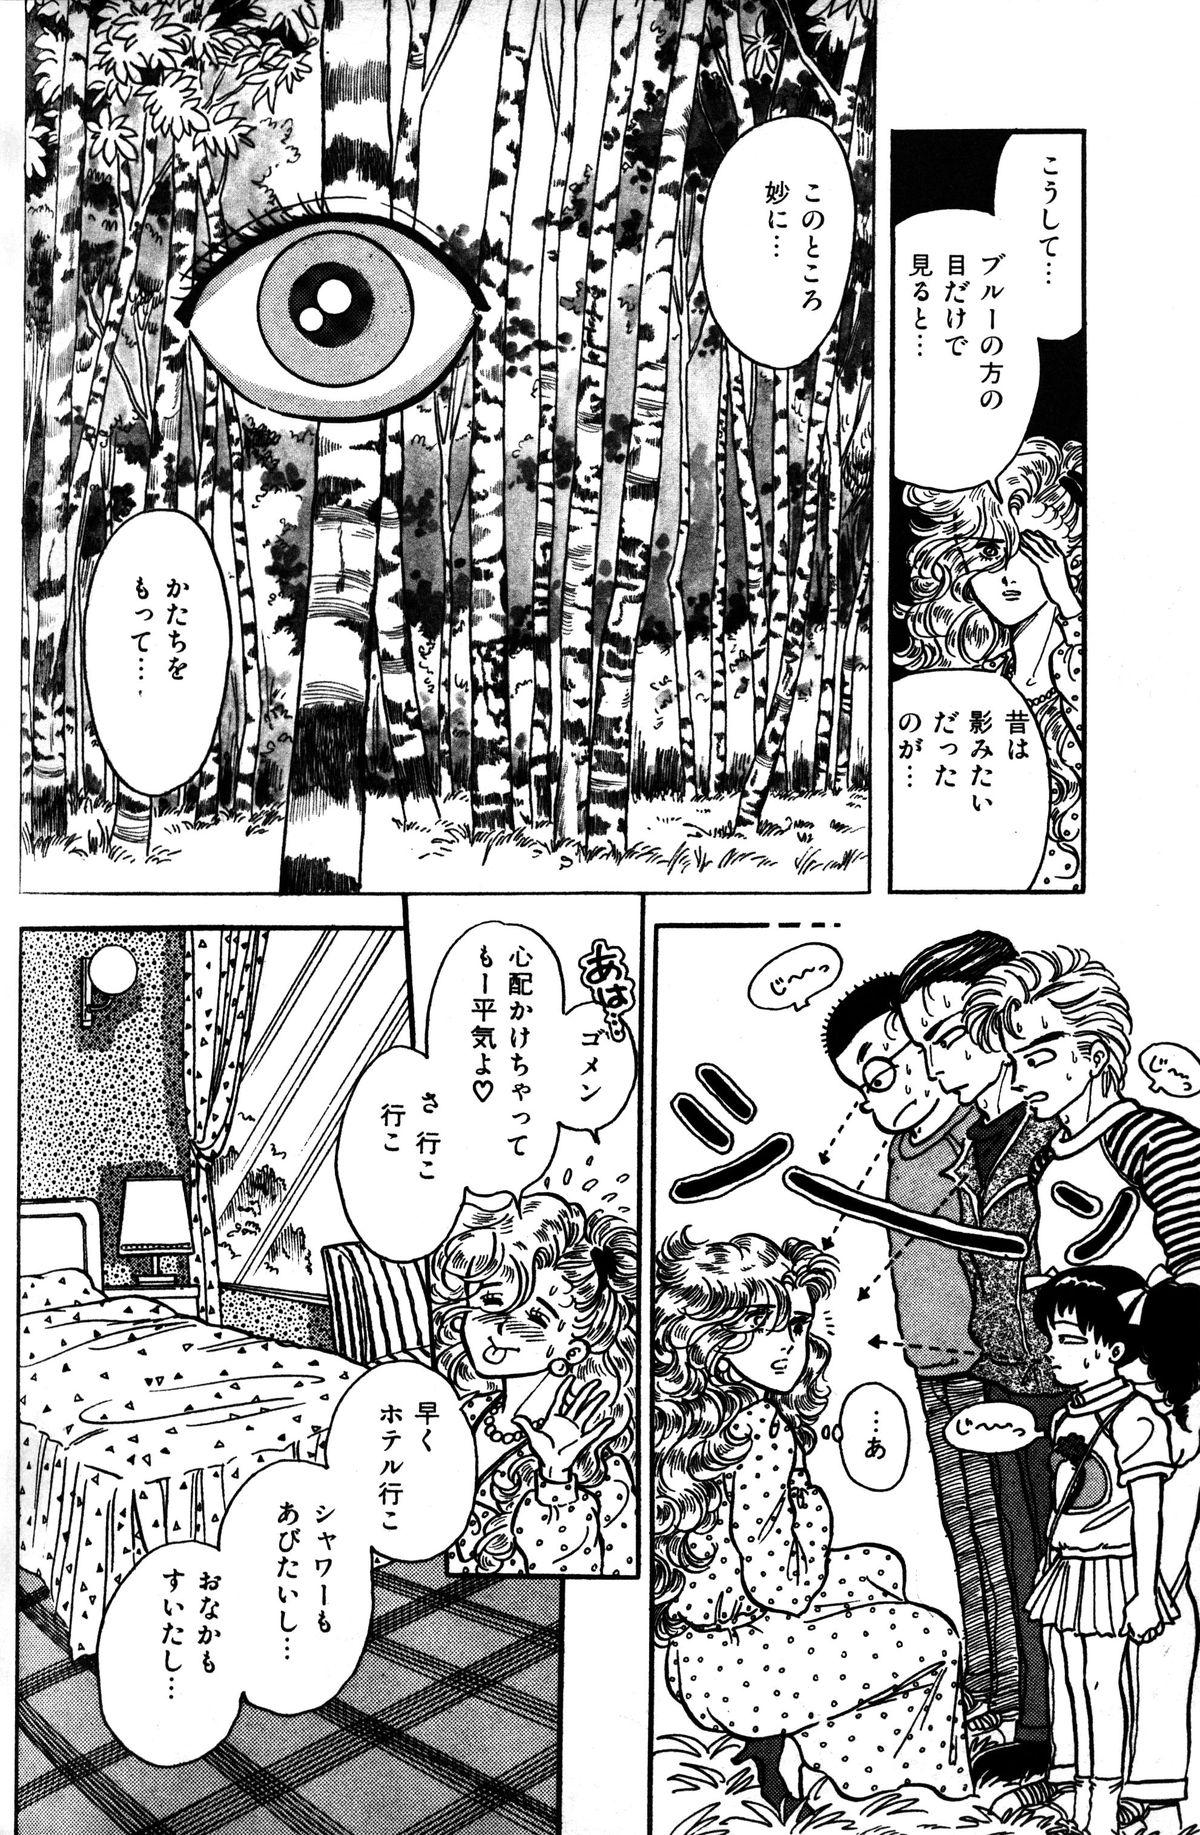 Melon Comic No. 01, メロンコミック 昭和59年6月号 53